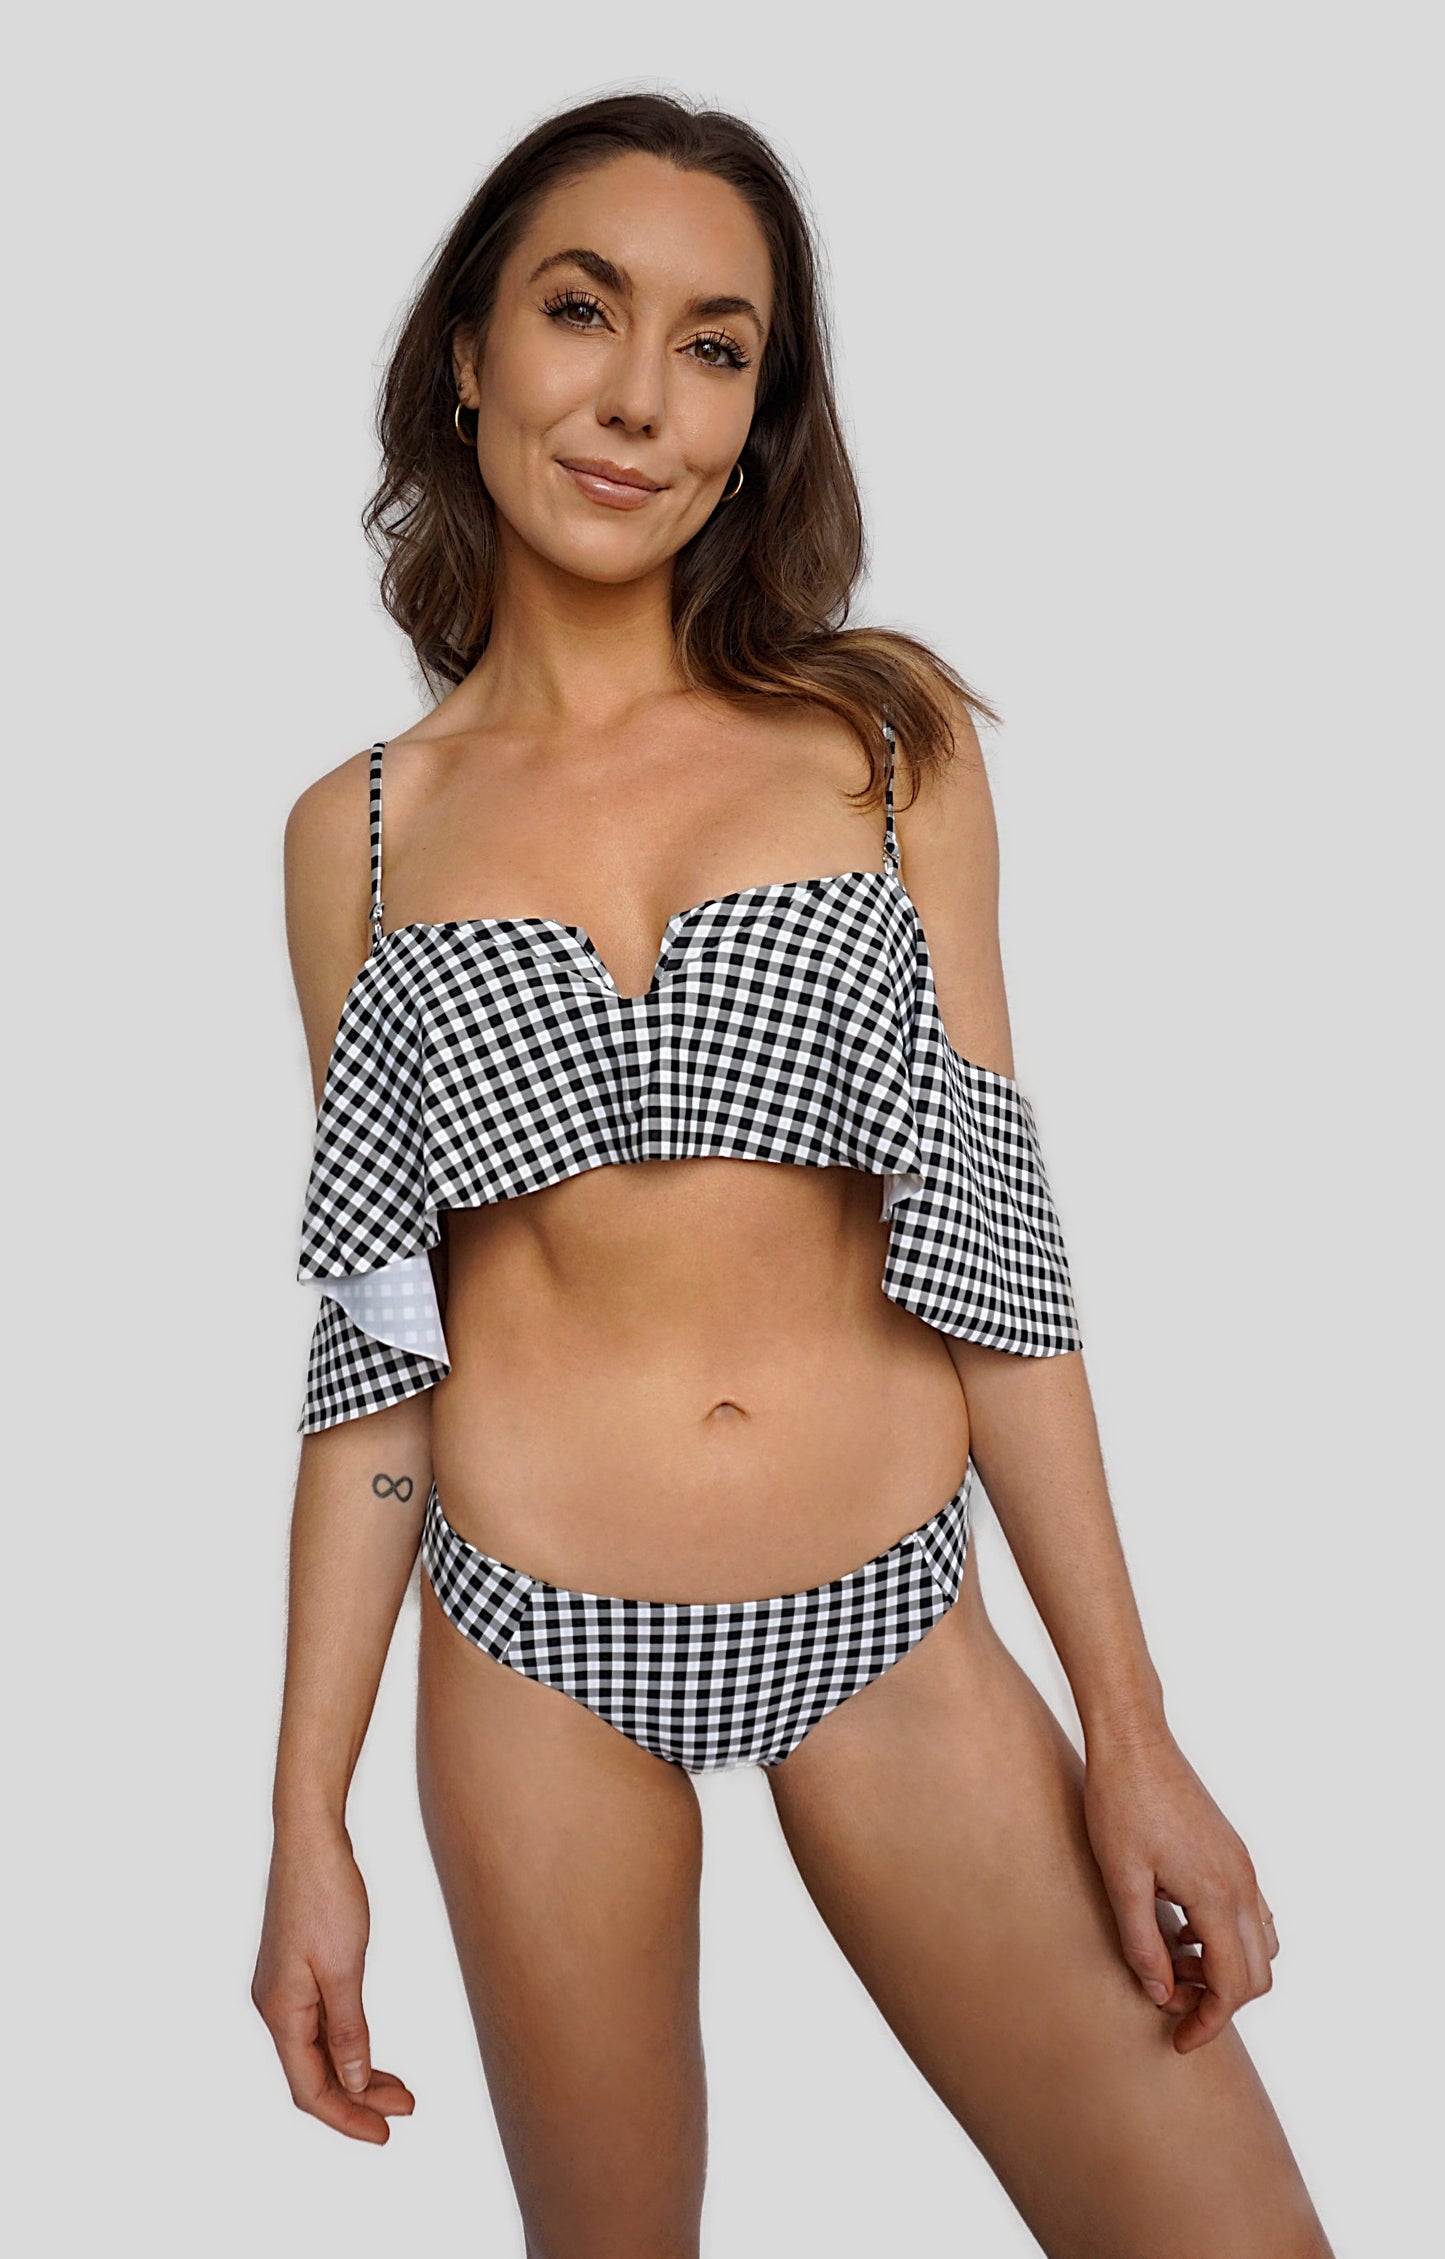 Carling Liski wearing Canadian swimsuit brand Prairie Swim gingham print classic cheeky bikini bottoms